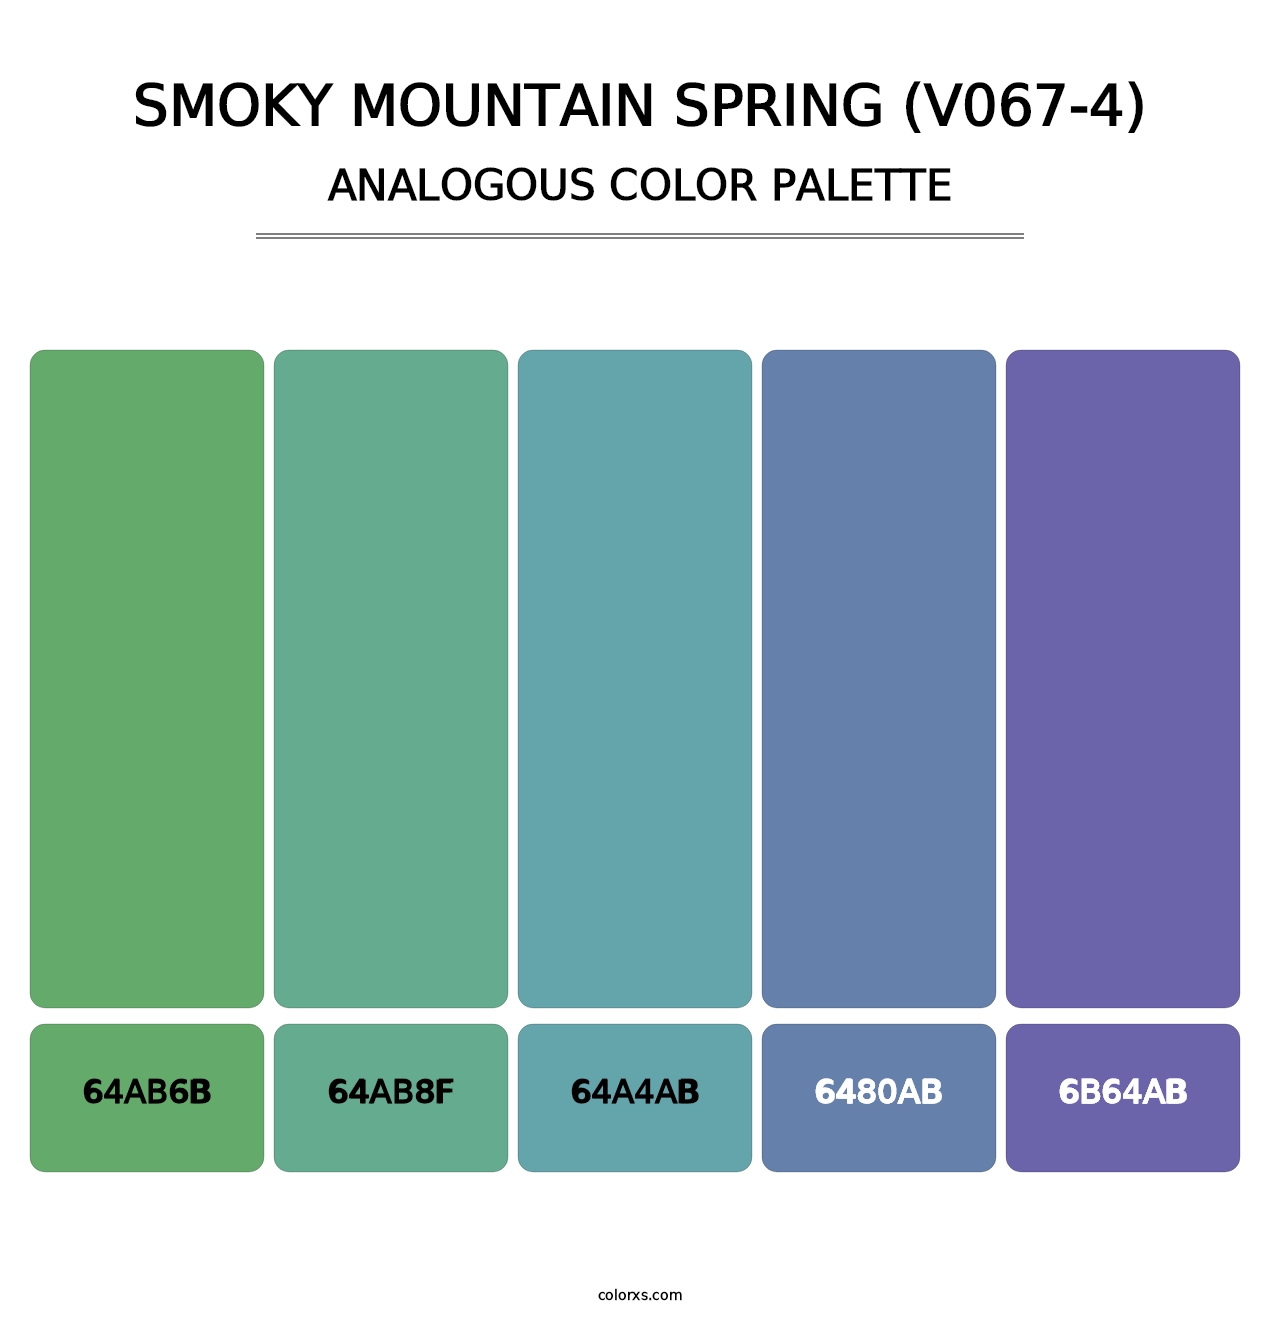 Smoky Mountain Spring (V067-4) - Analogous Color Palette